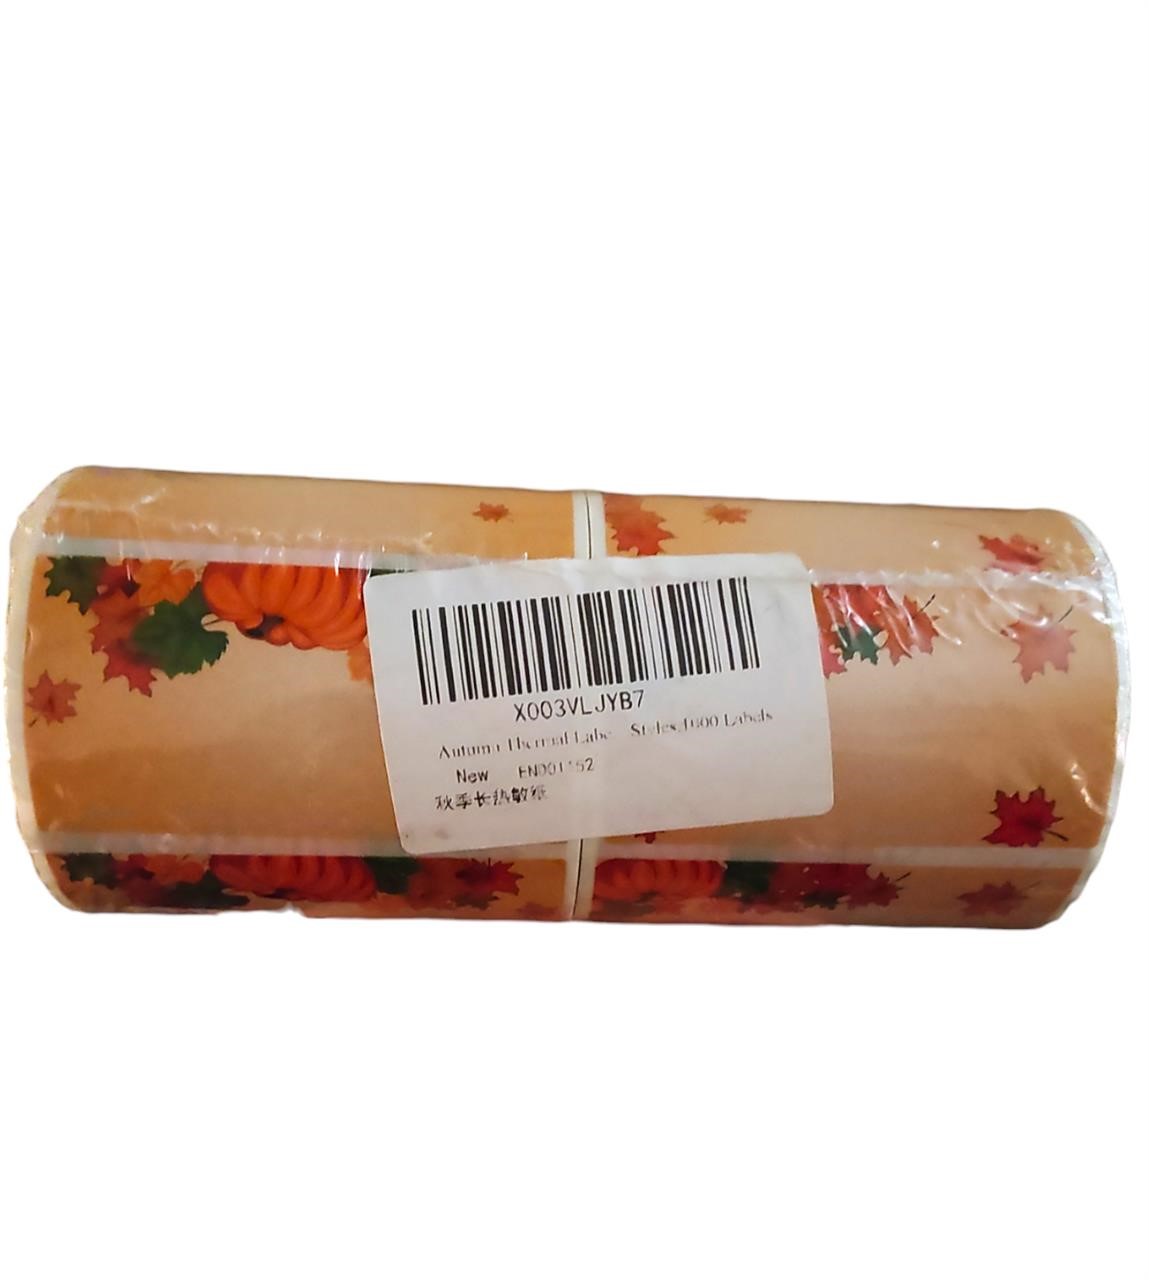 Autumn thermal labels 1000 labels